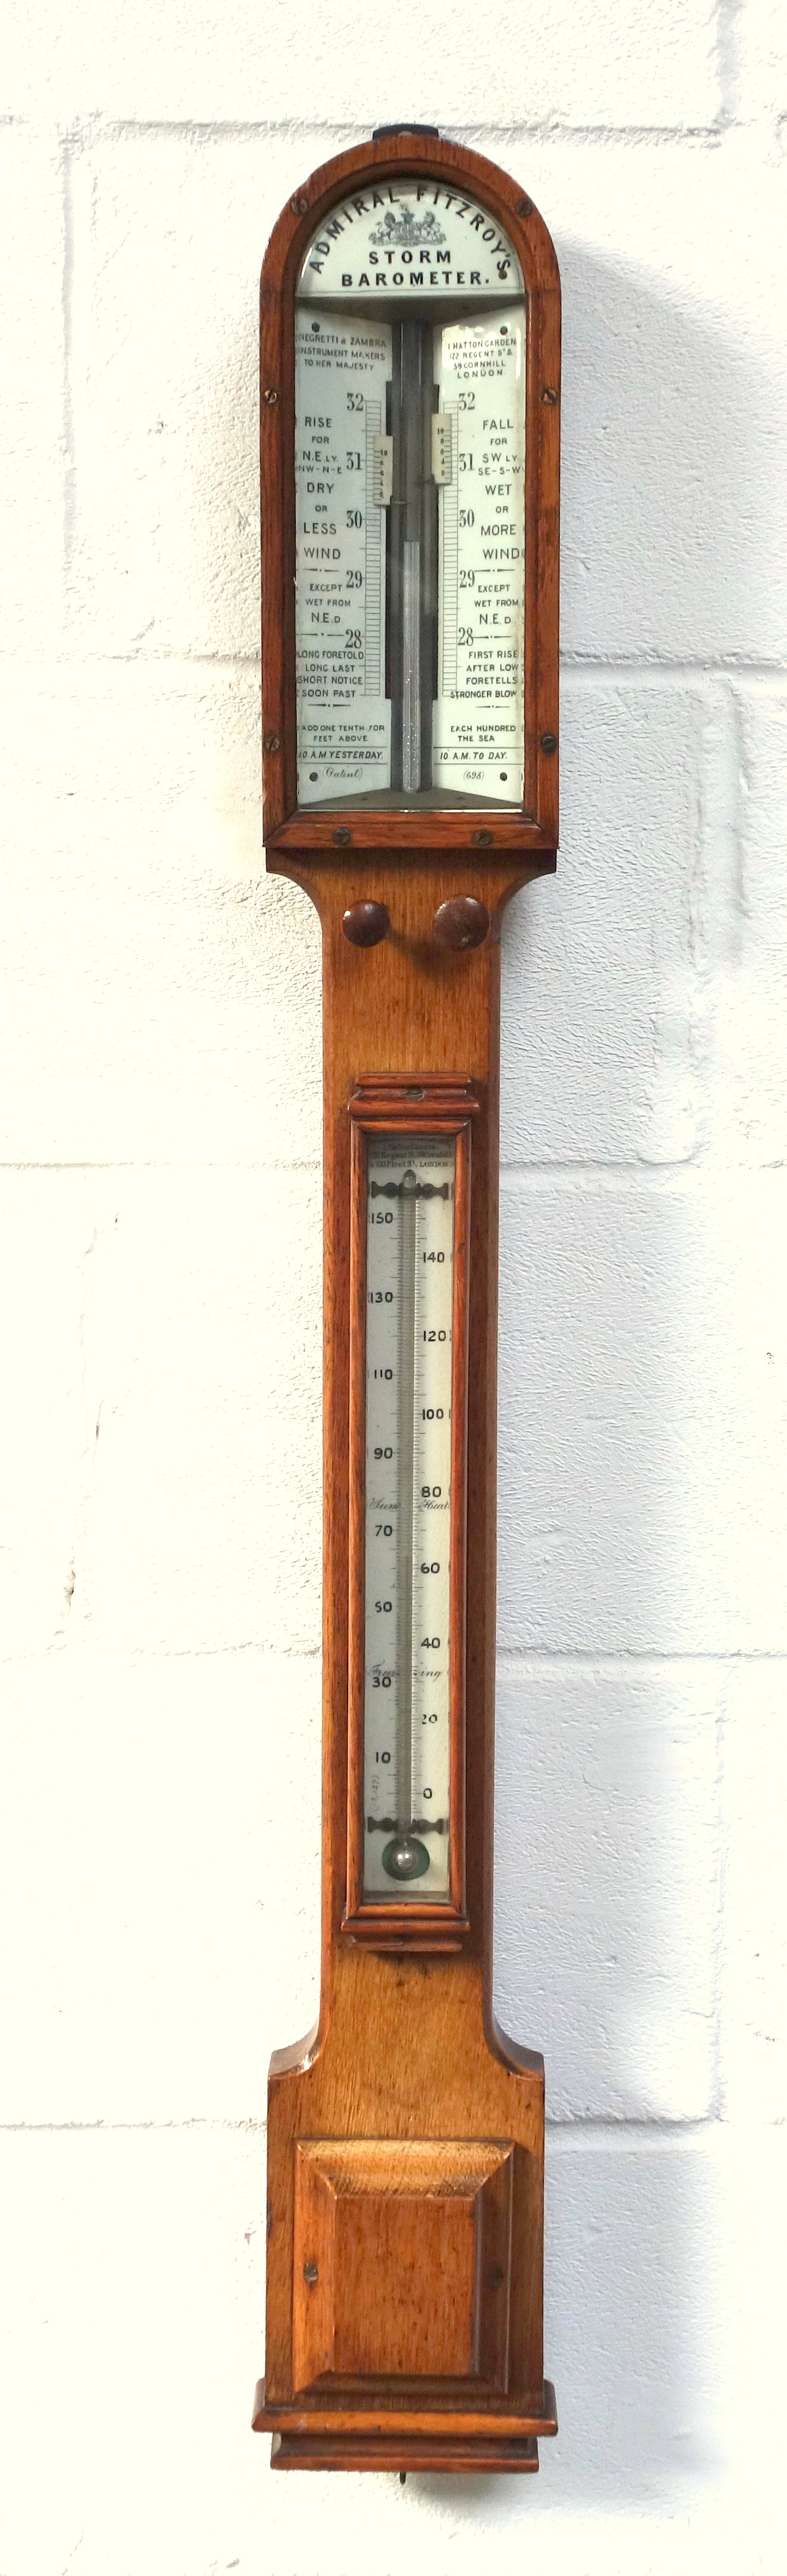 Late Victorian Admiral Fitzroy's storm barometer by Negretti and Zambra, 1 Hatton Garden, 122 Regent - Image 2 of 4